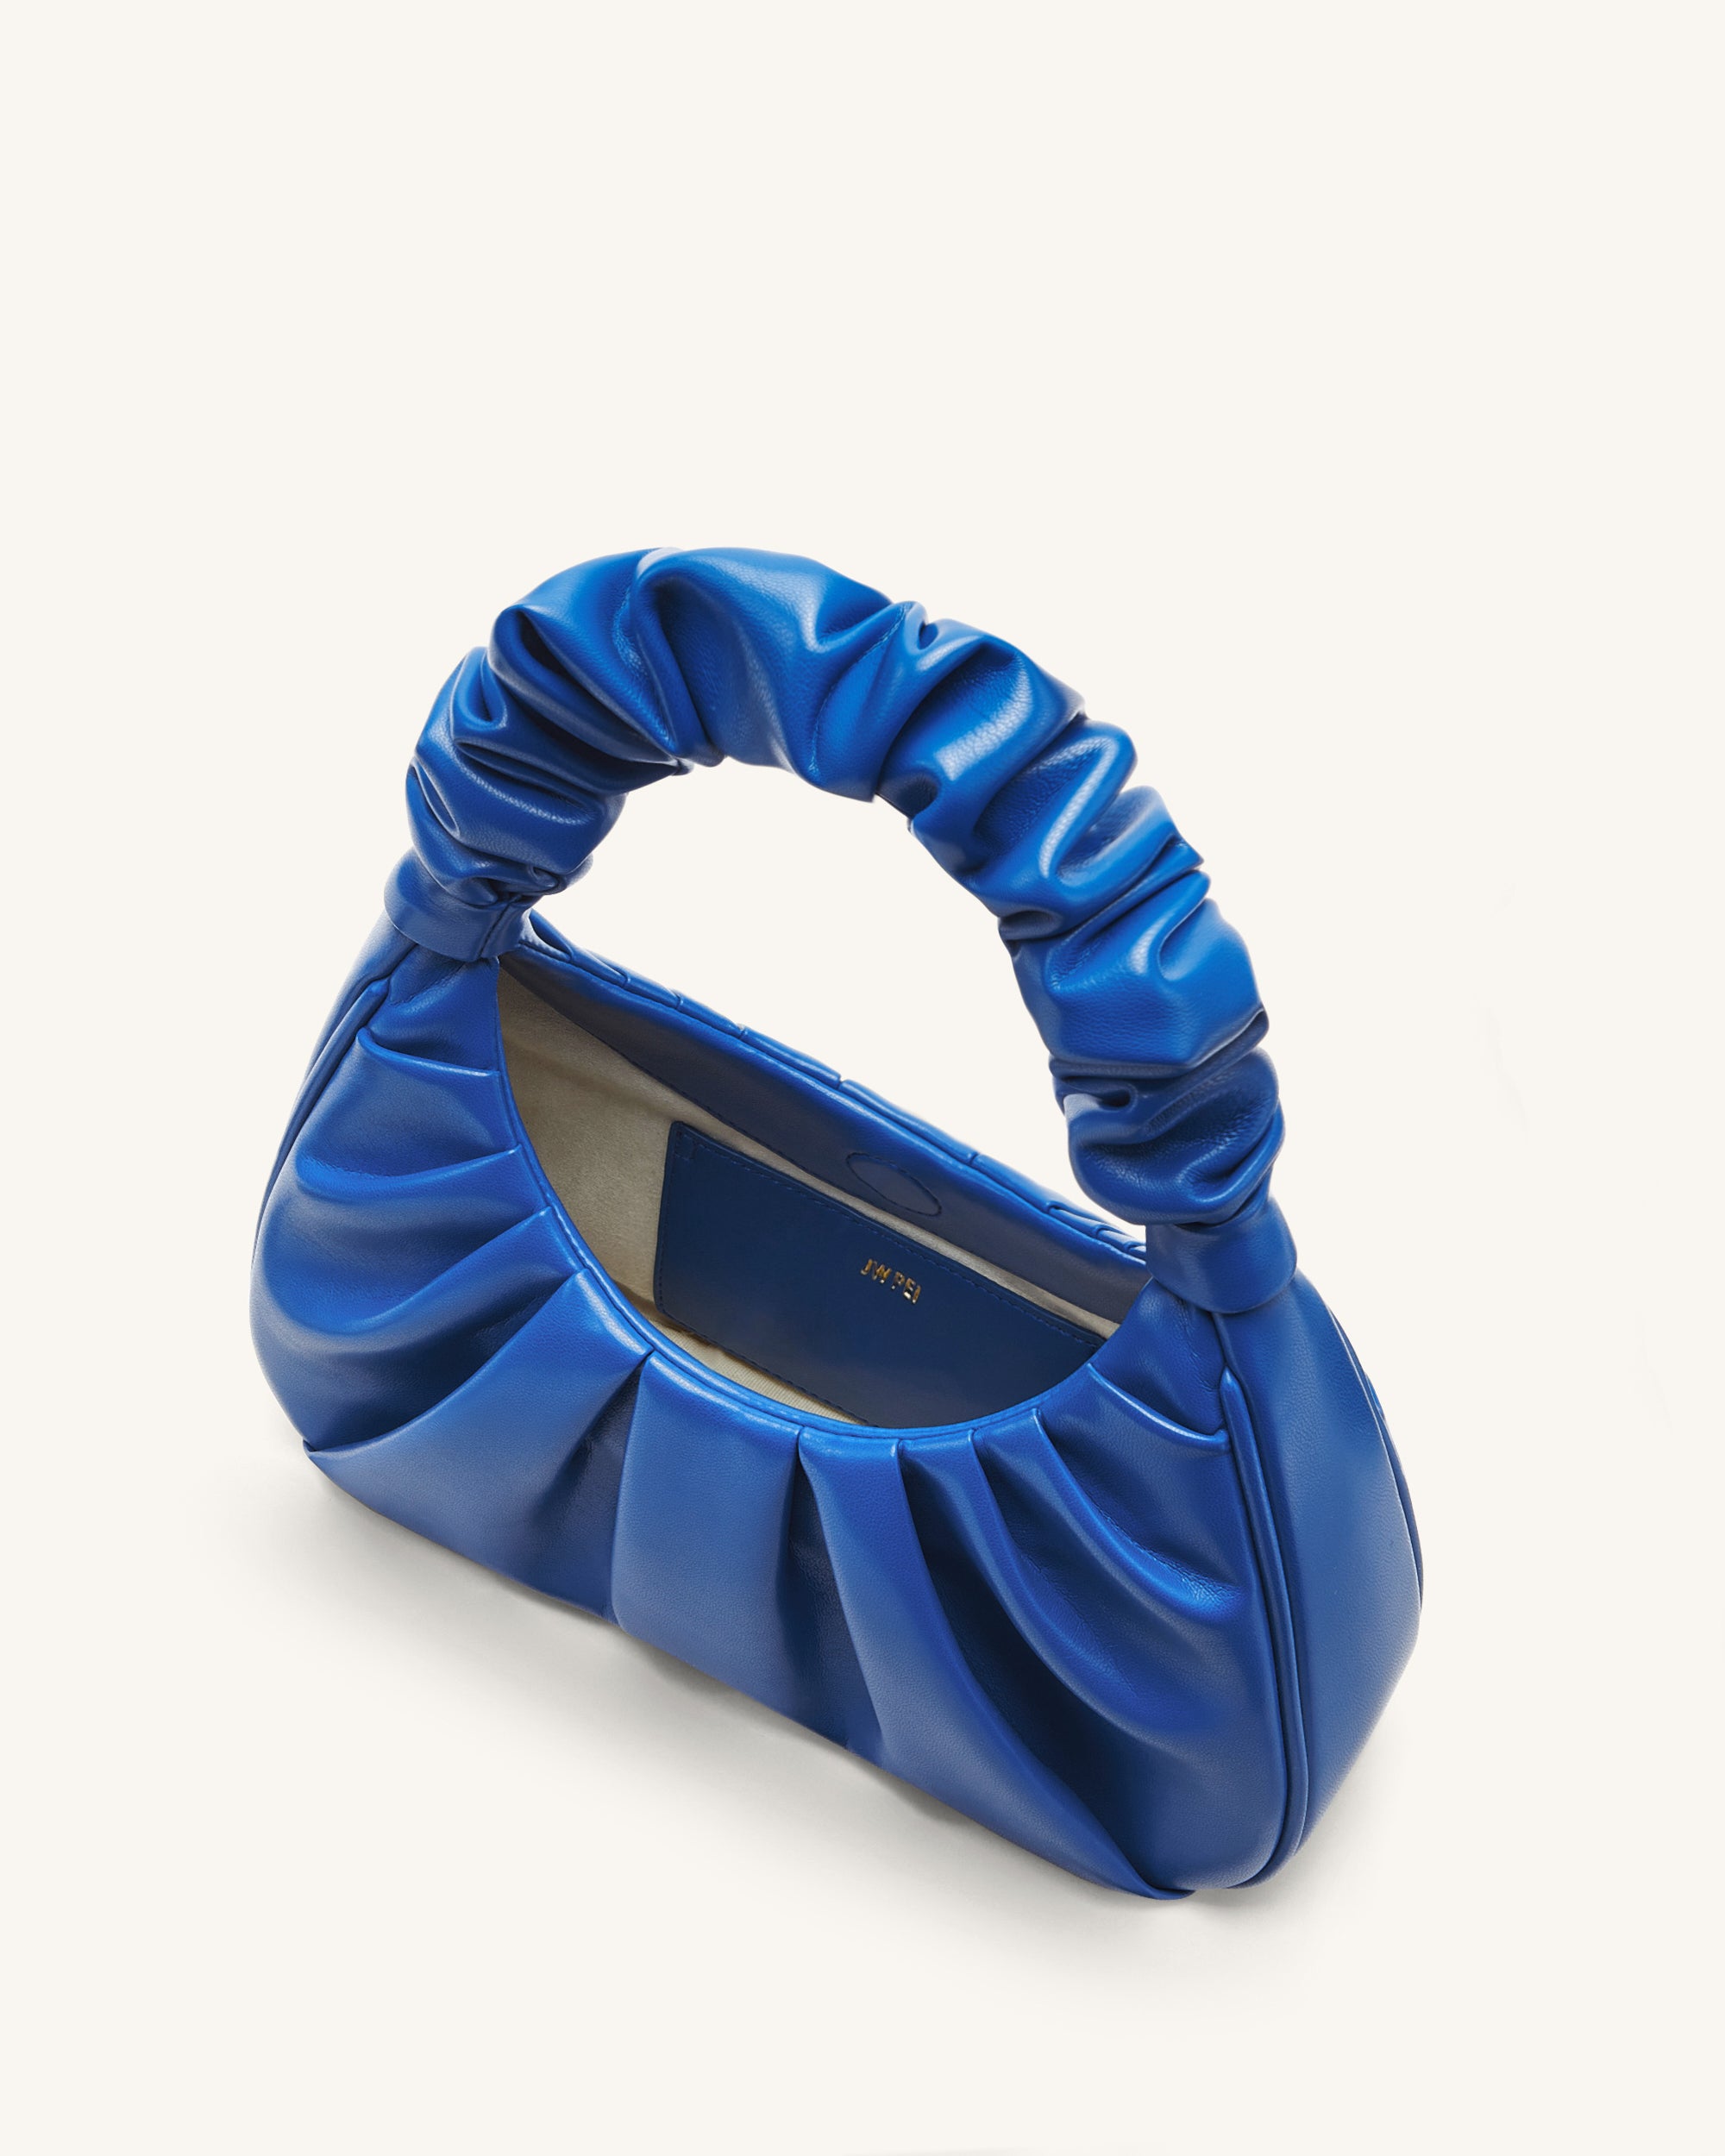 JW PEI - Gabbi Bag in classic blue] Vegan leather - Depop